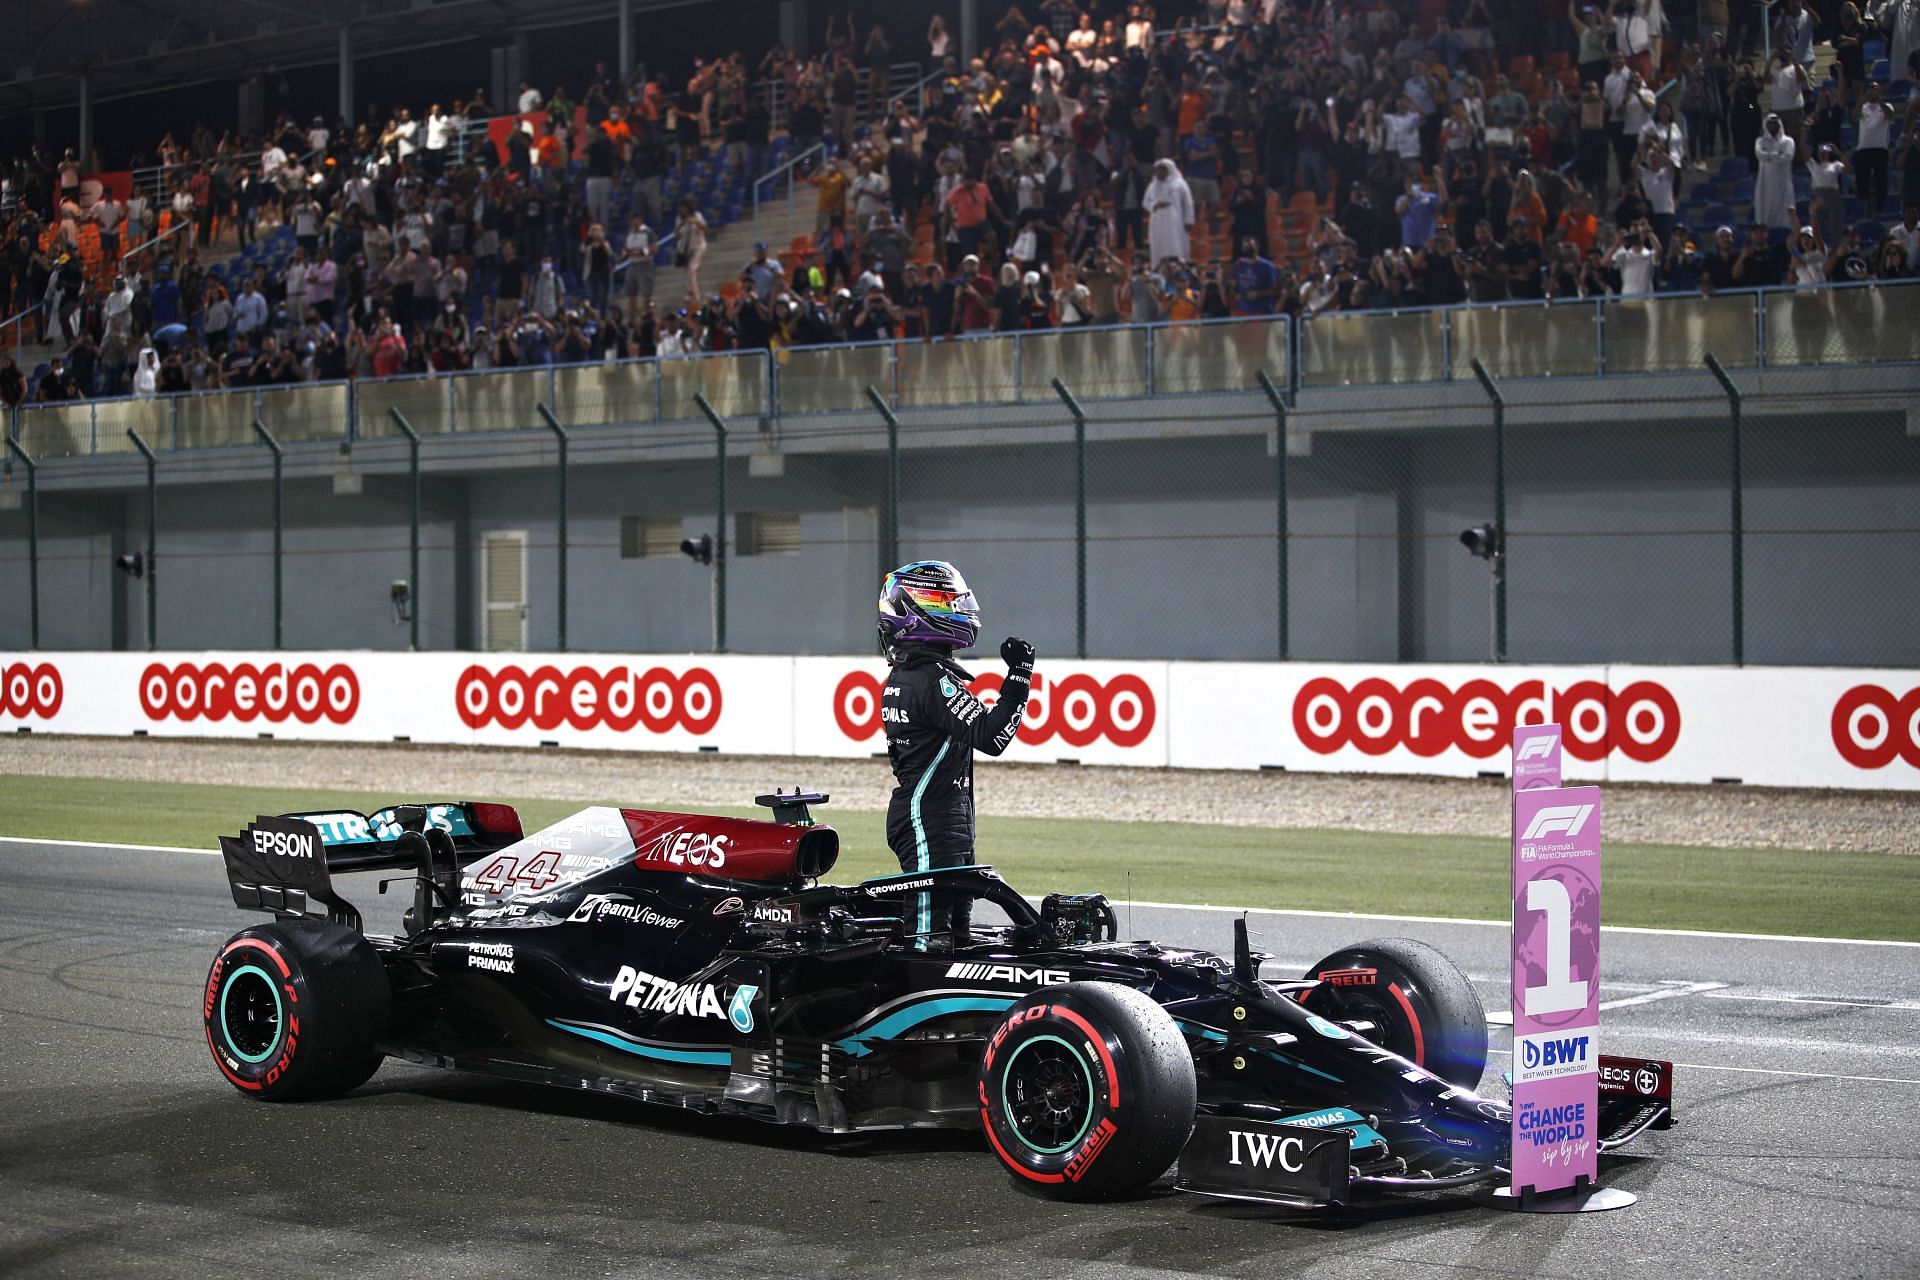 F1 Grand Prix of Qatar - Lewis Hamilton takes pole position in qualifying.